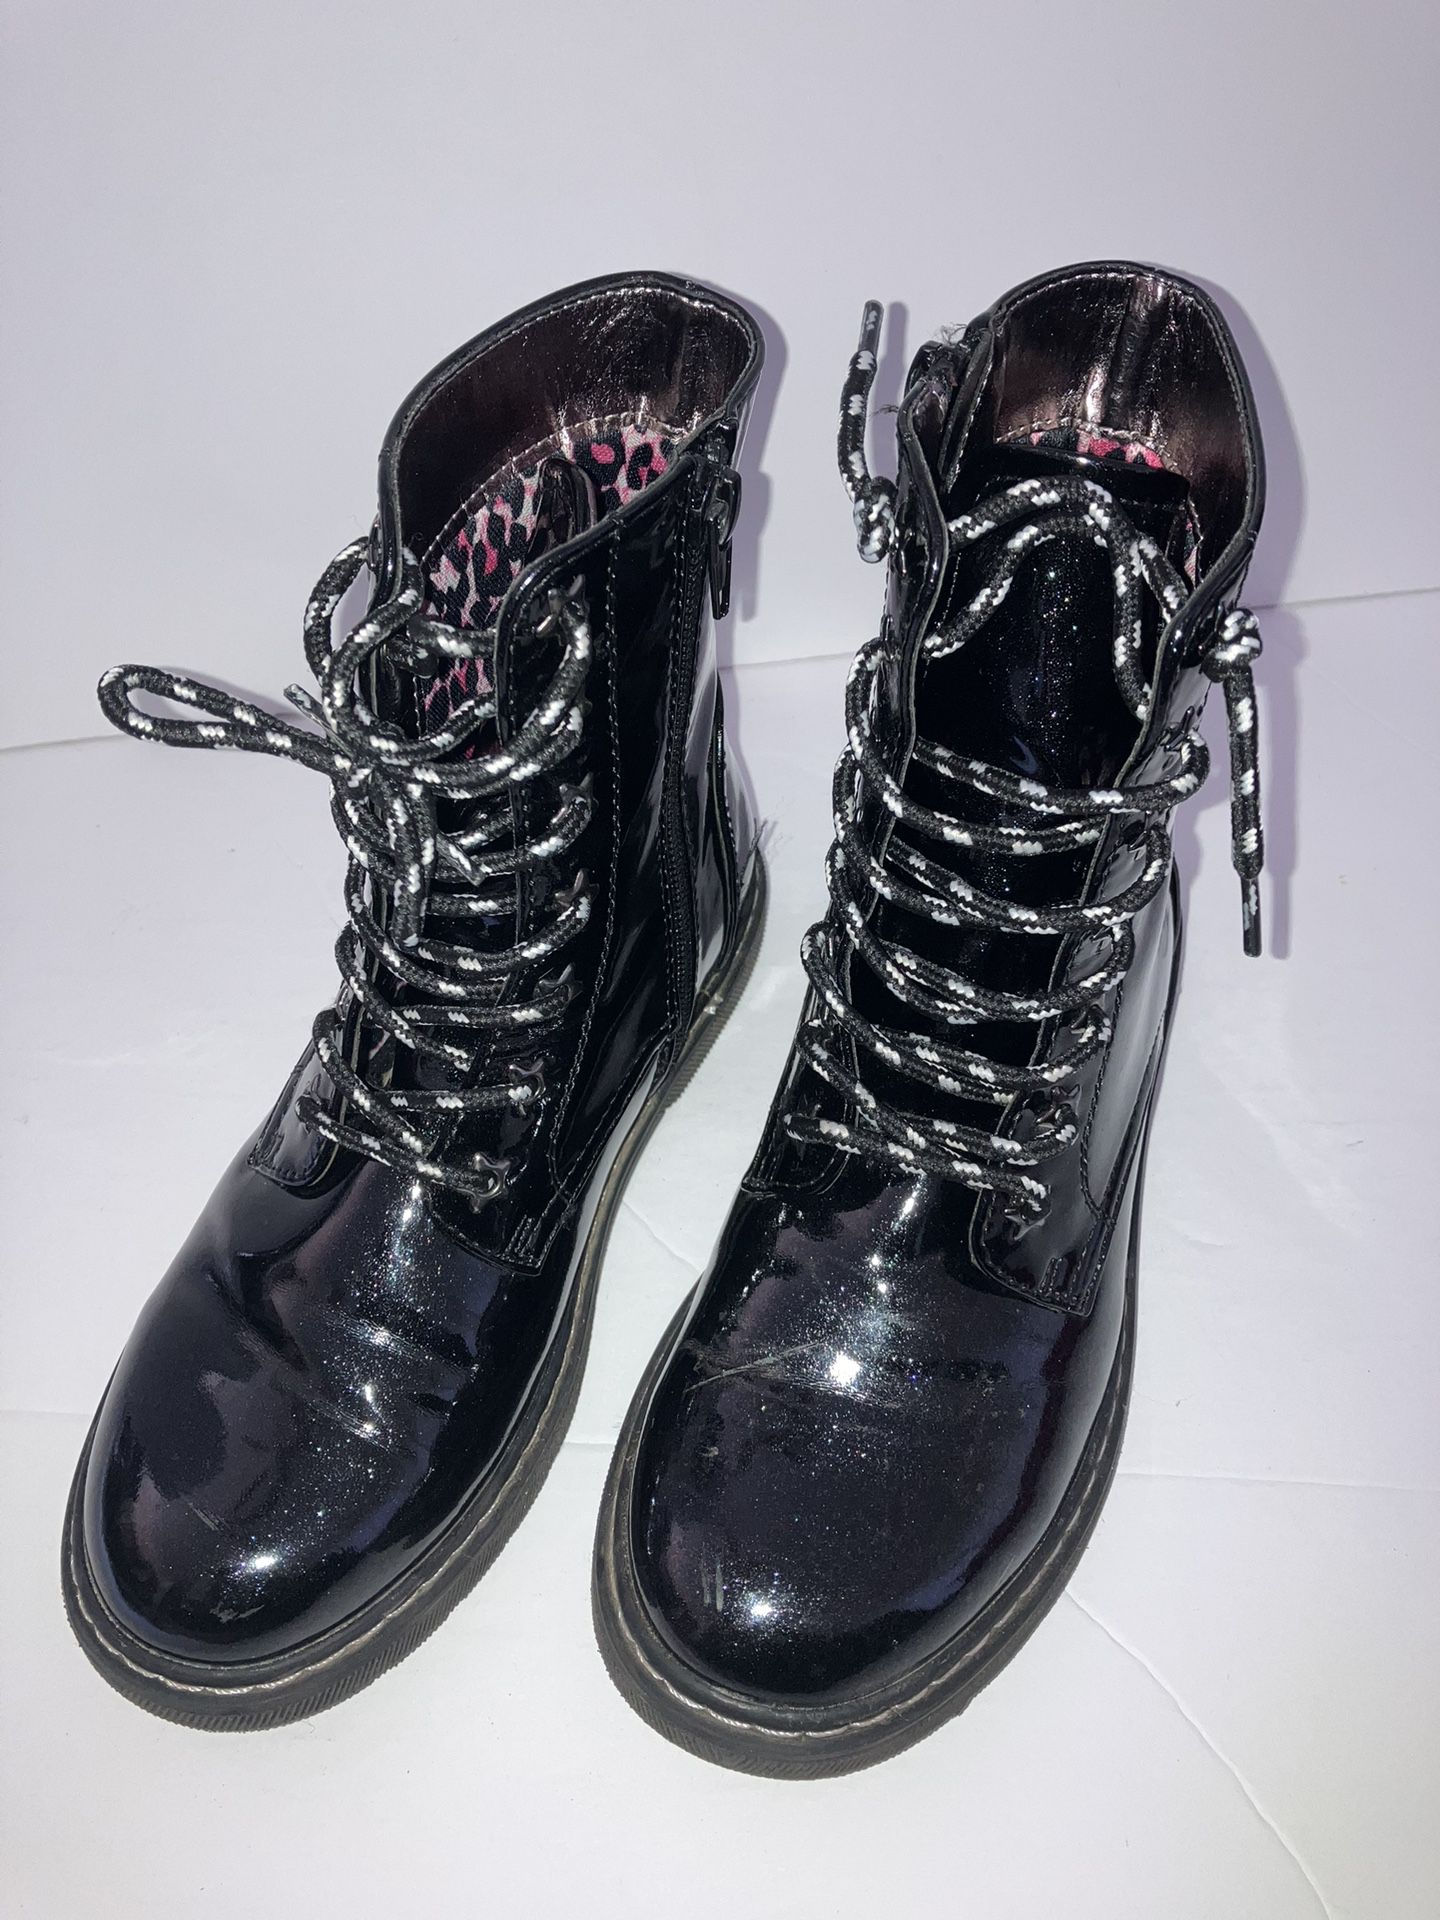 Girls Lace Up Black Boots- Sz 2